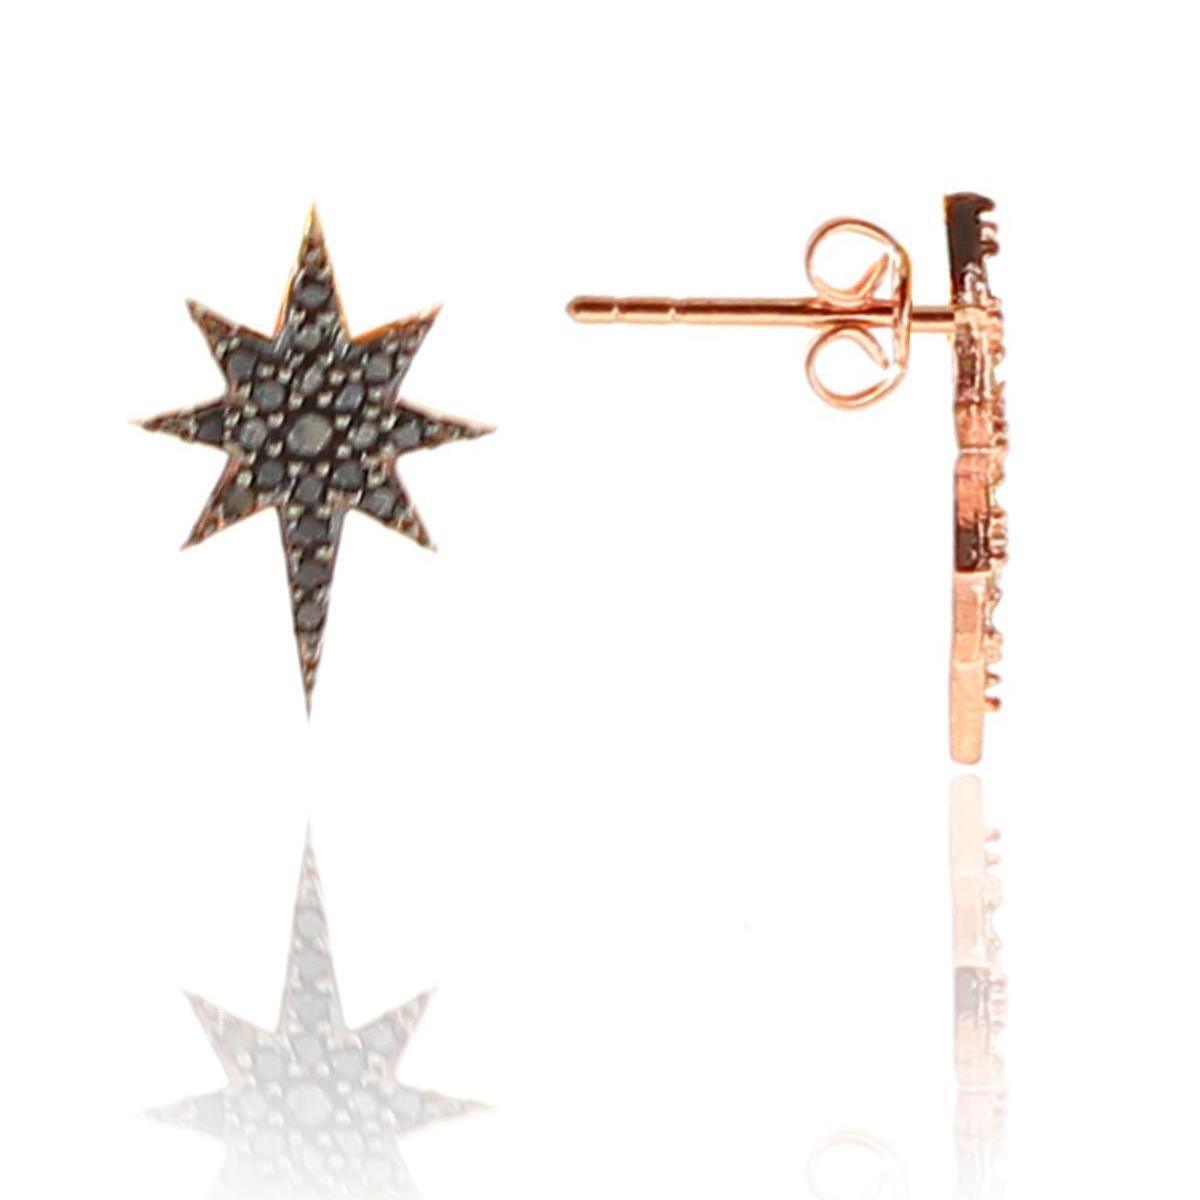 North Star Stud Earrings • Black Zircon Earrings • Gift For Wife - Trending Silver Gifts